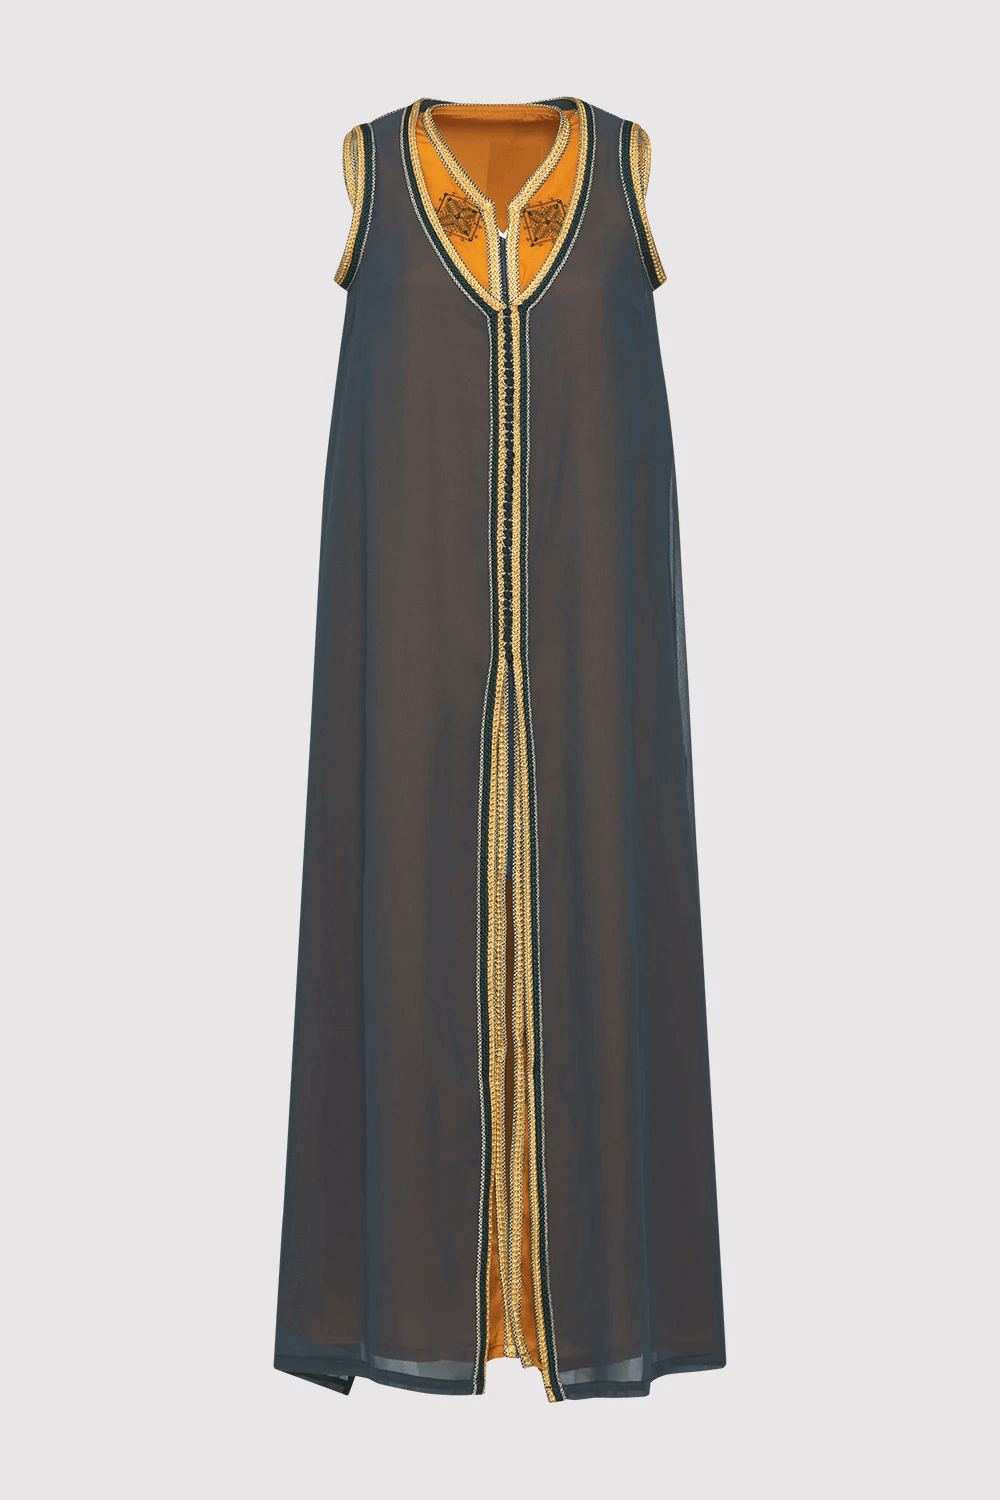 Kaftan Sirina Sleeveless Layered Maxi Dress with Rope Belt in Green and Yellow Gold